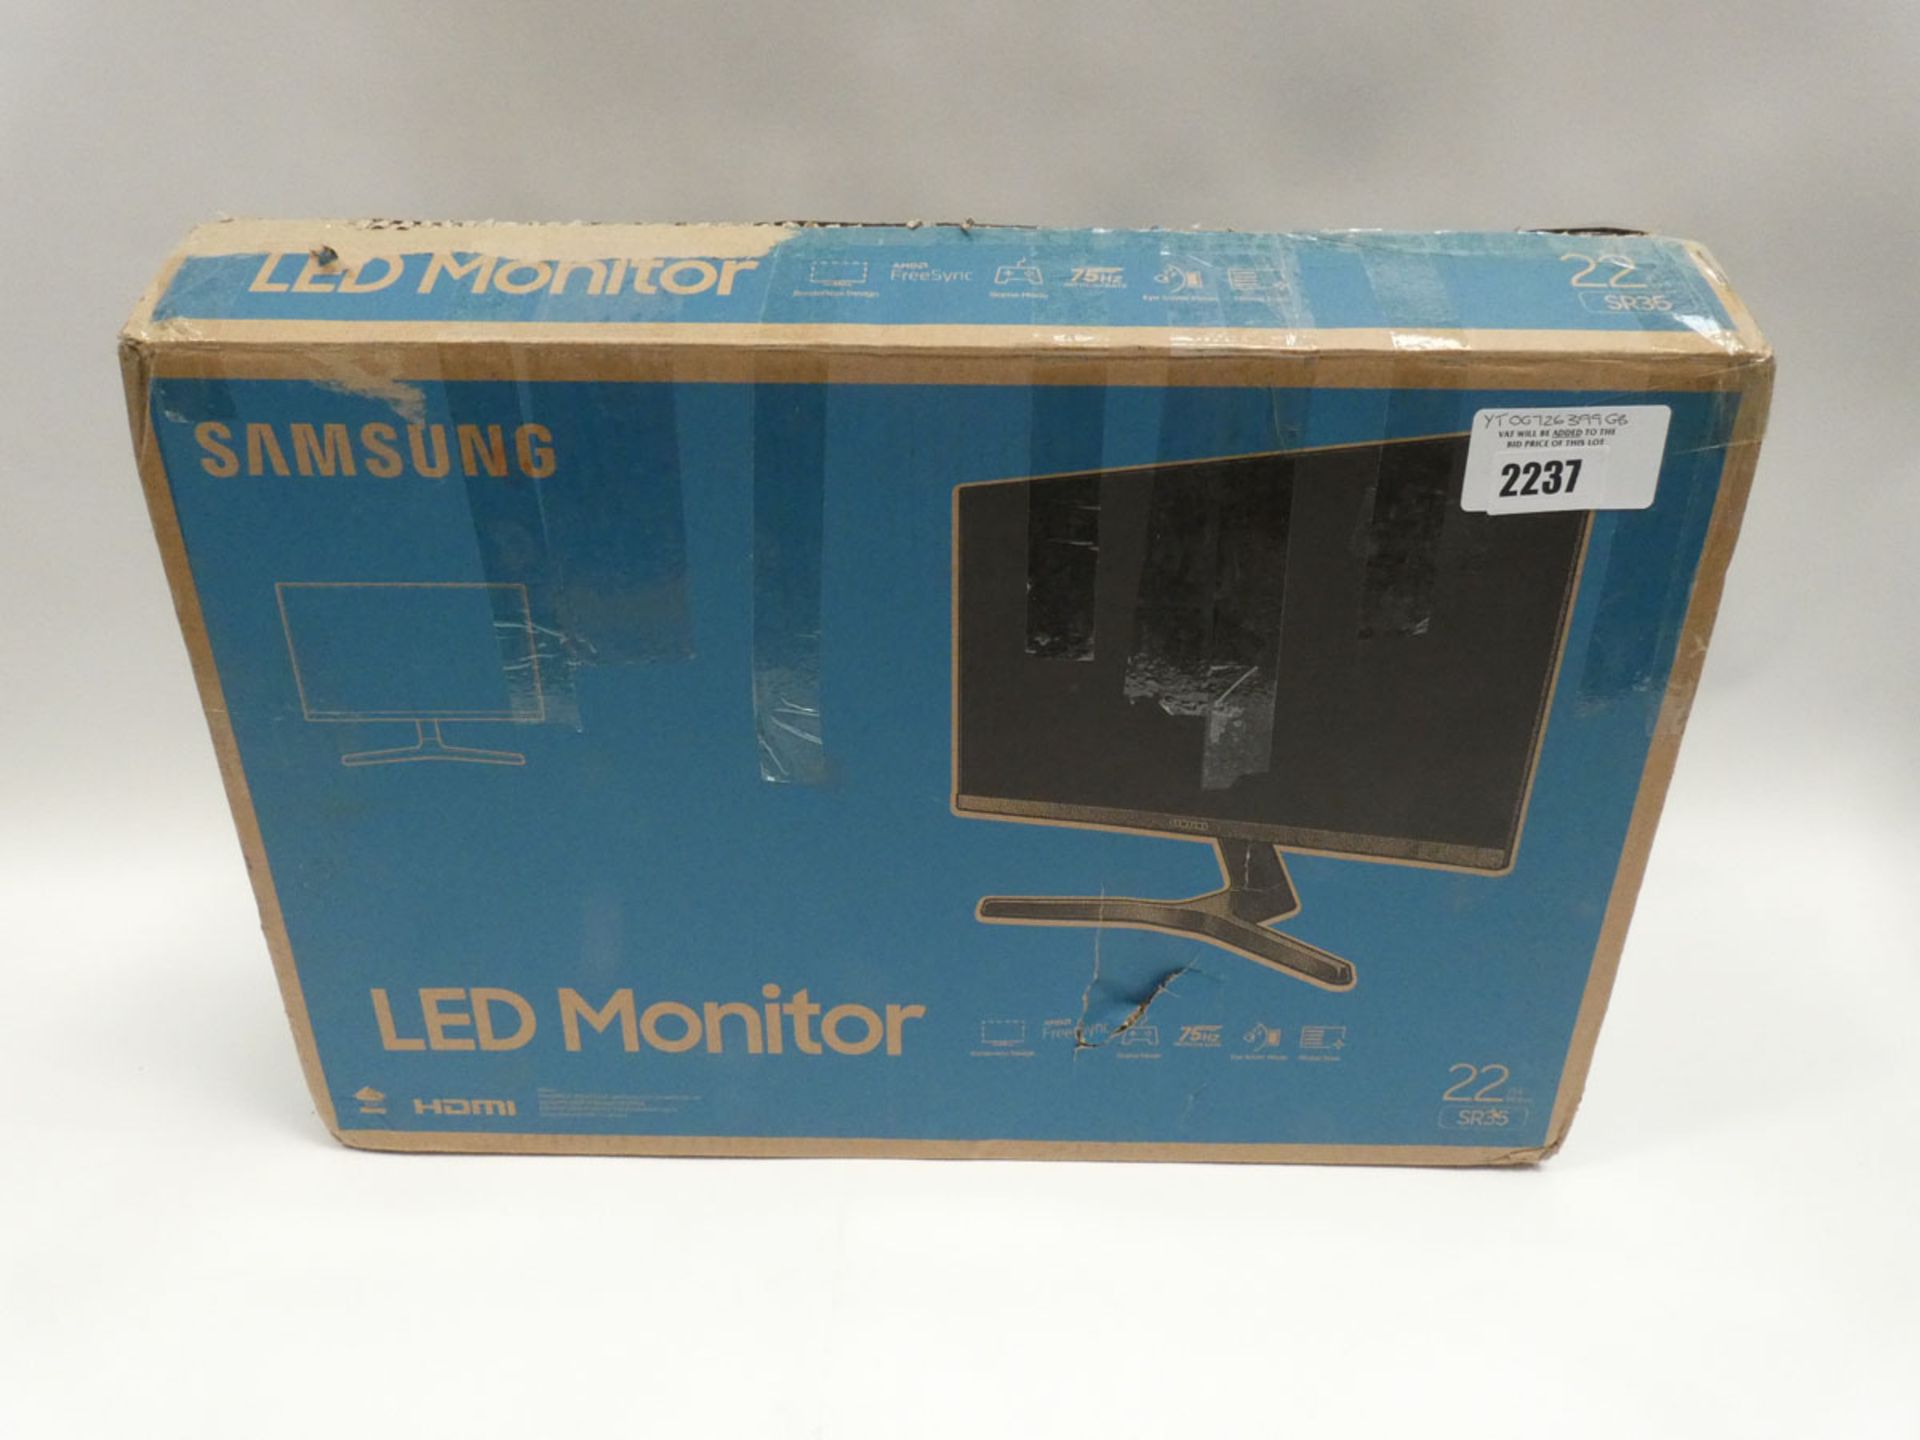 Samsung SR35 LED Monitor 21.5'' in box